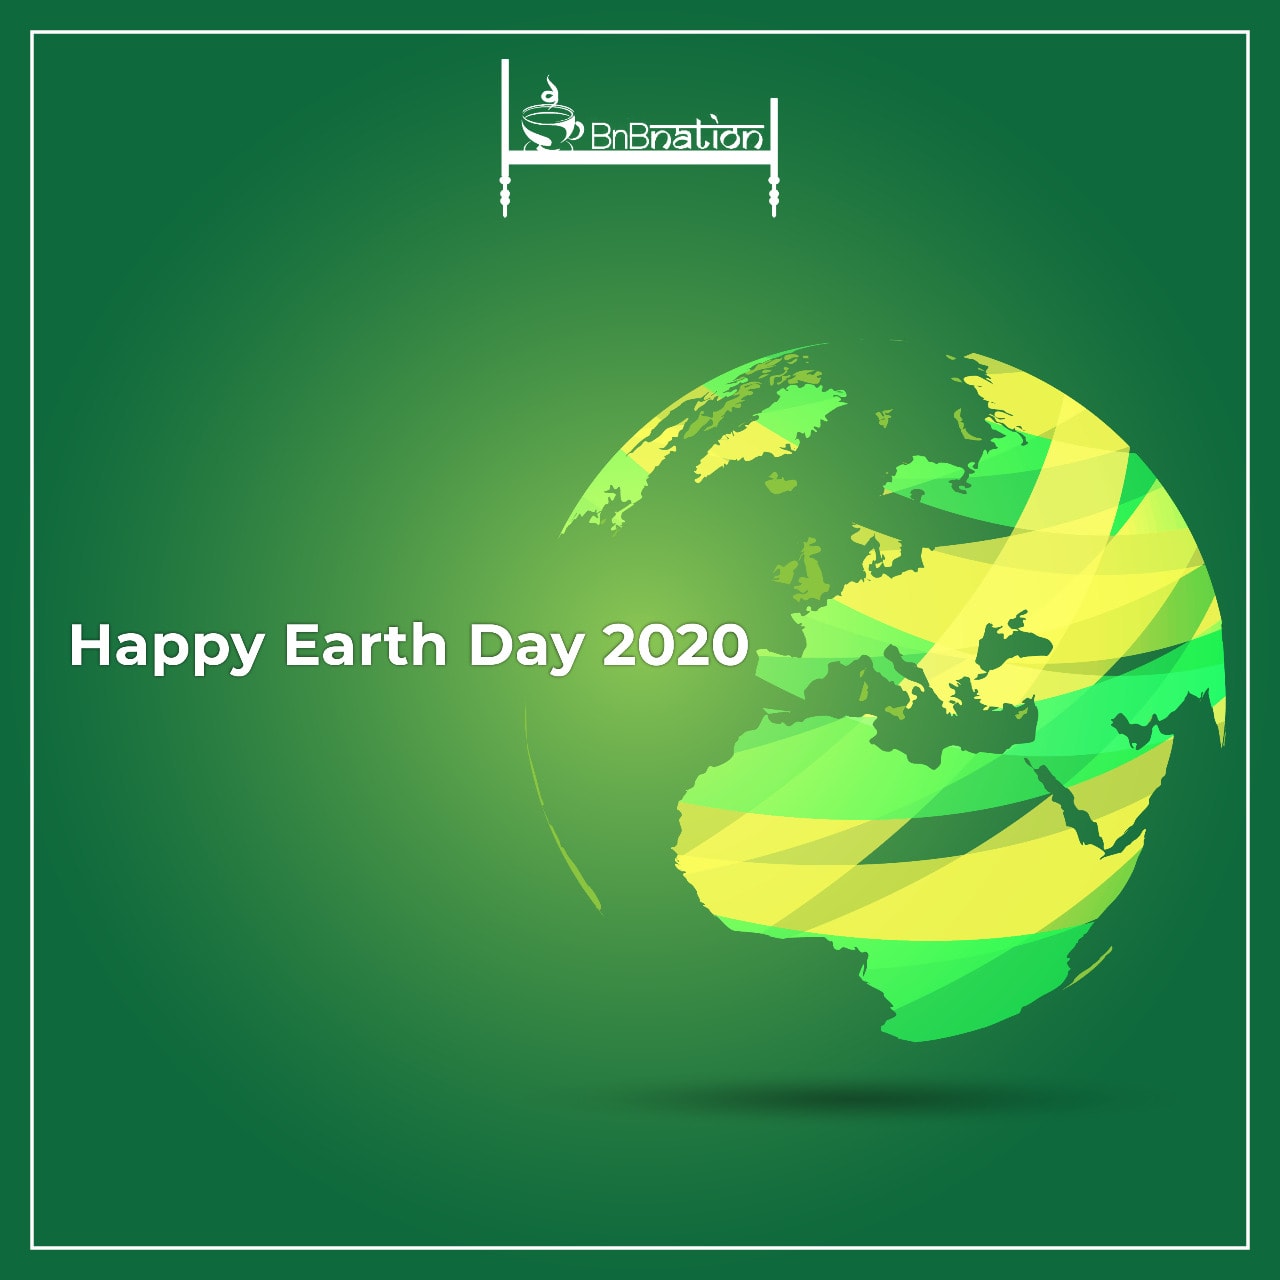 Celebrating World Earth Day 2020